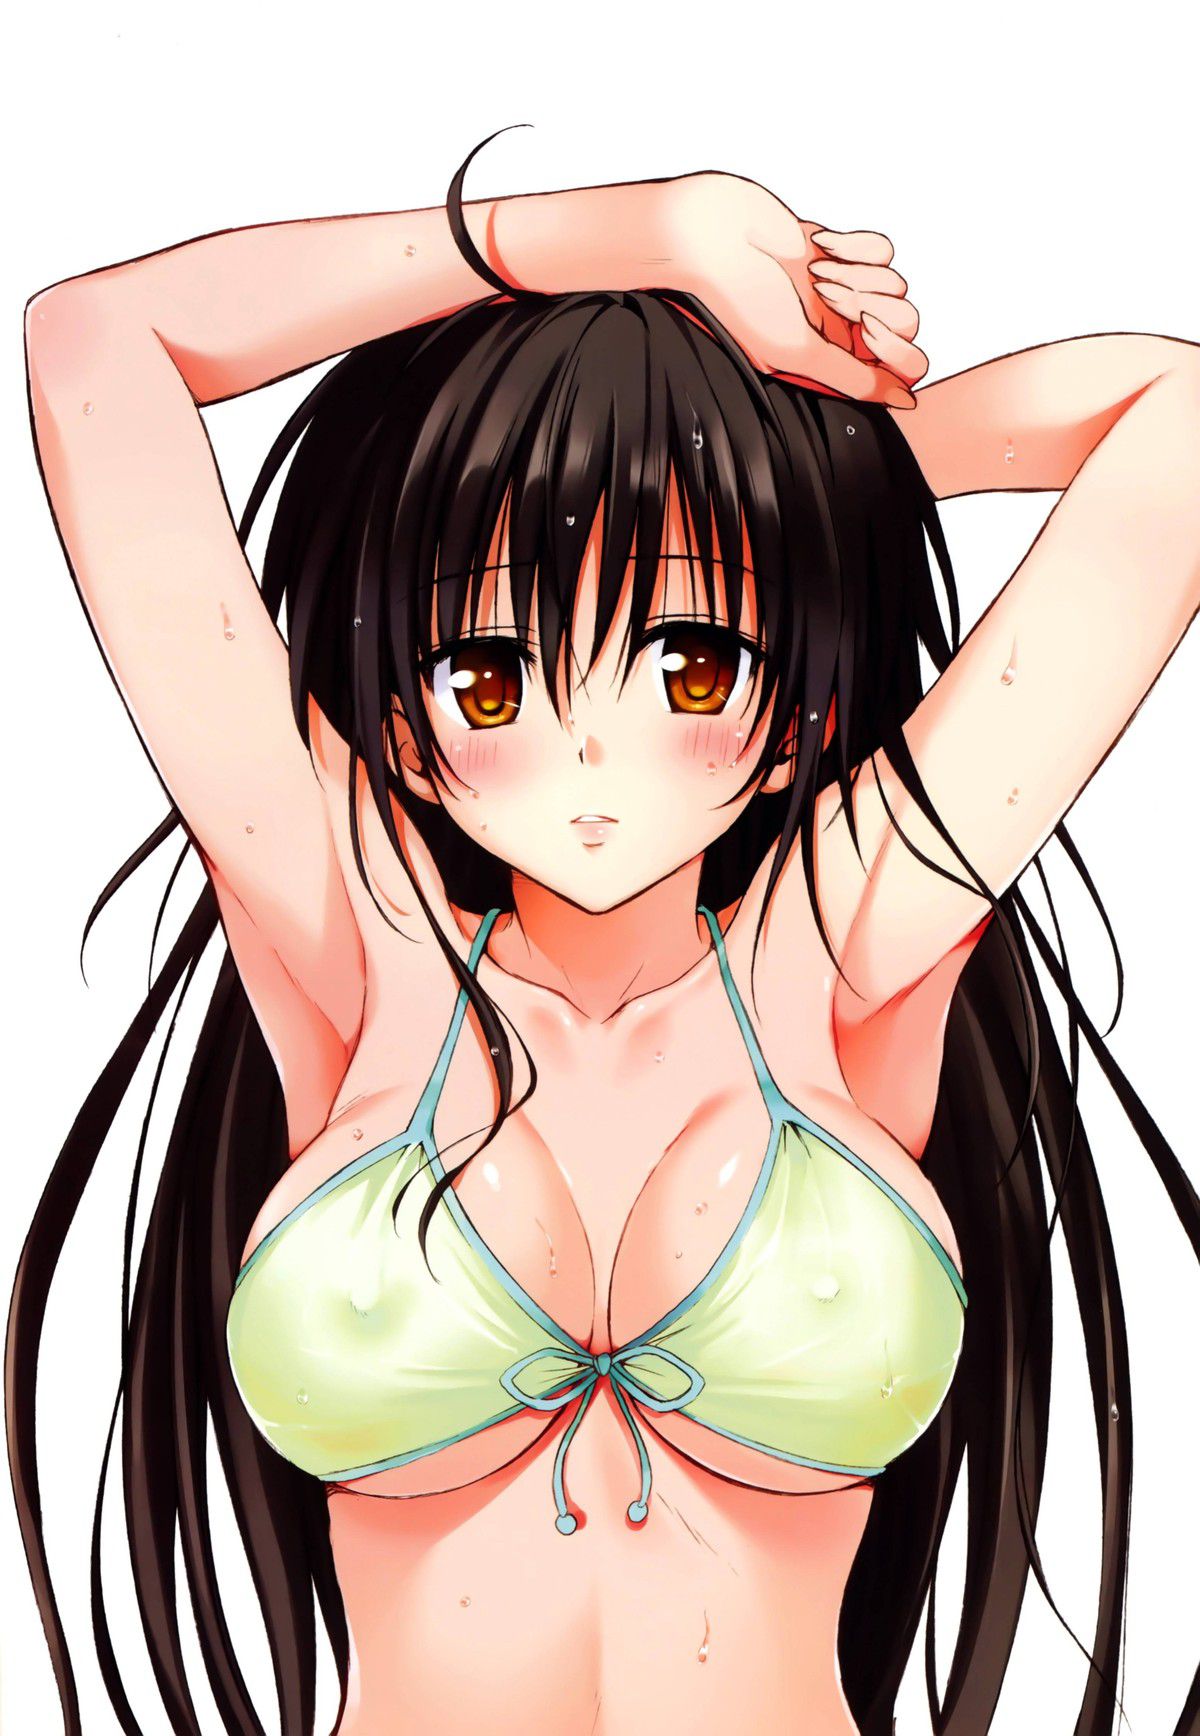 [Image] [-] Kotegawa Yui is the most erotic too legendary wwwwwww 1